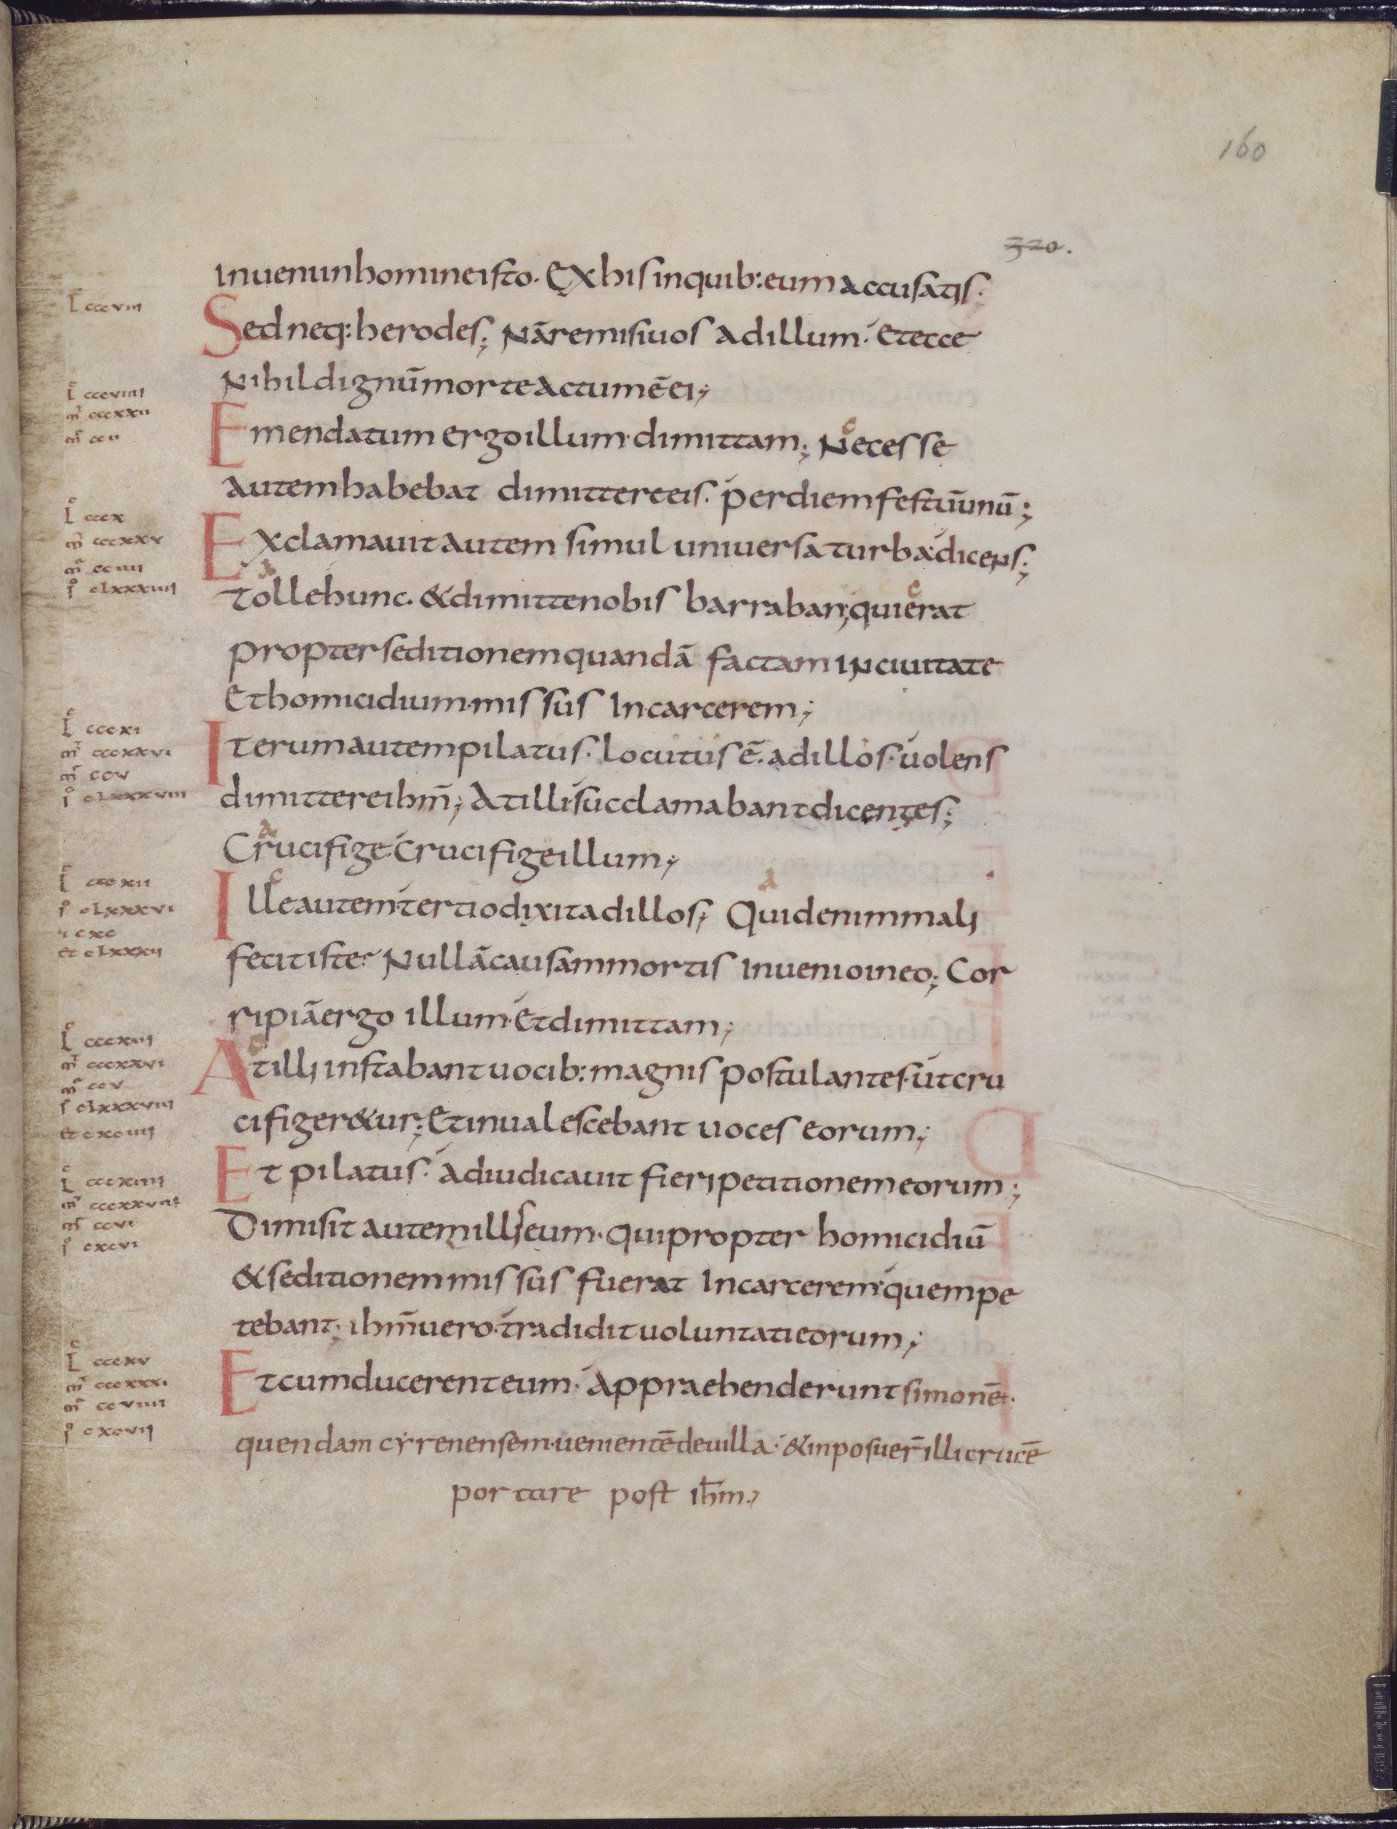 Carolingian Gospel Book (British Library, MS Add. 11848), written in Carolingian minuscule